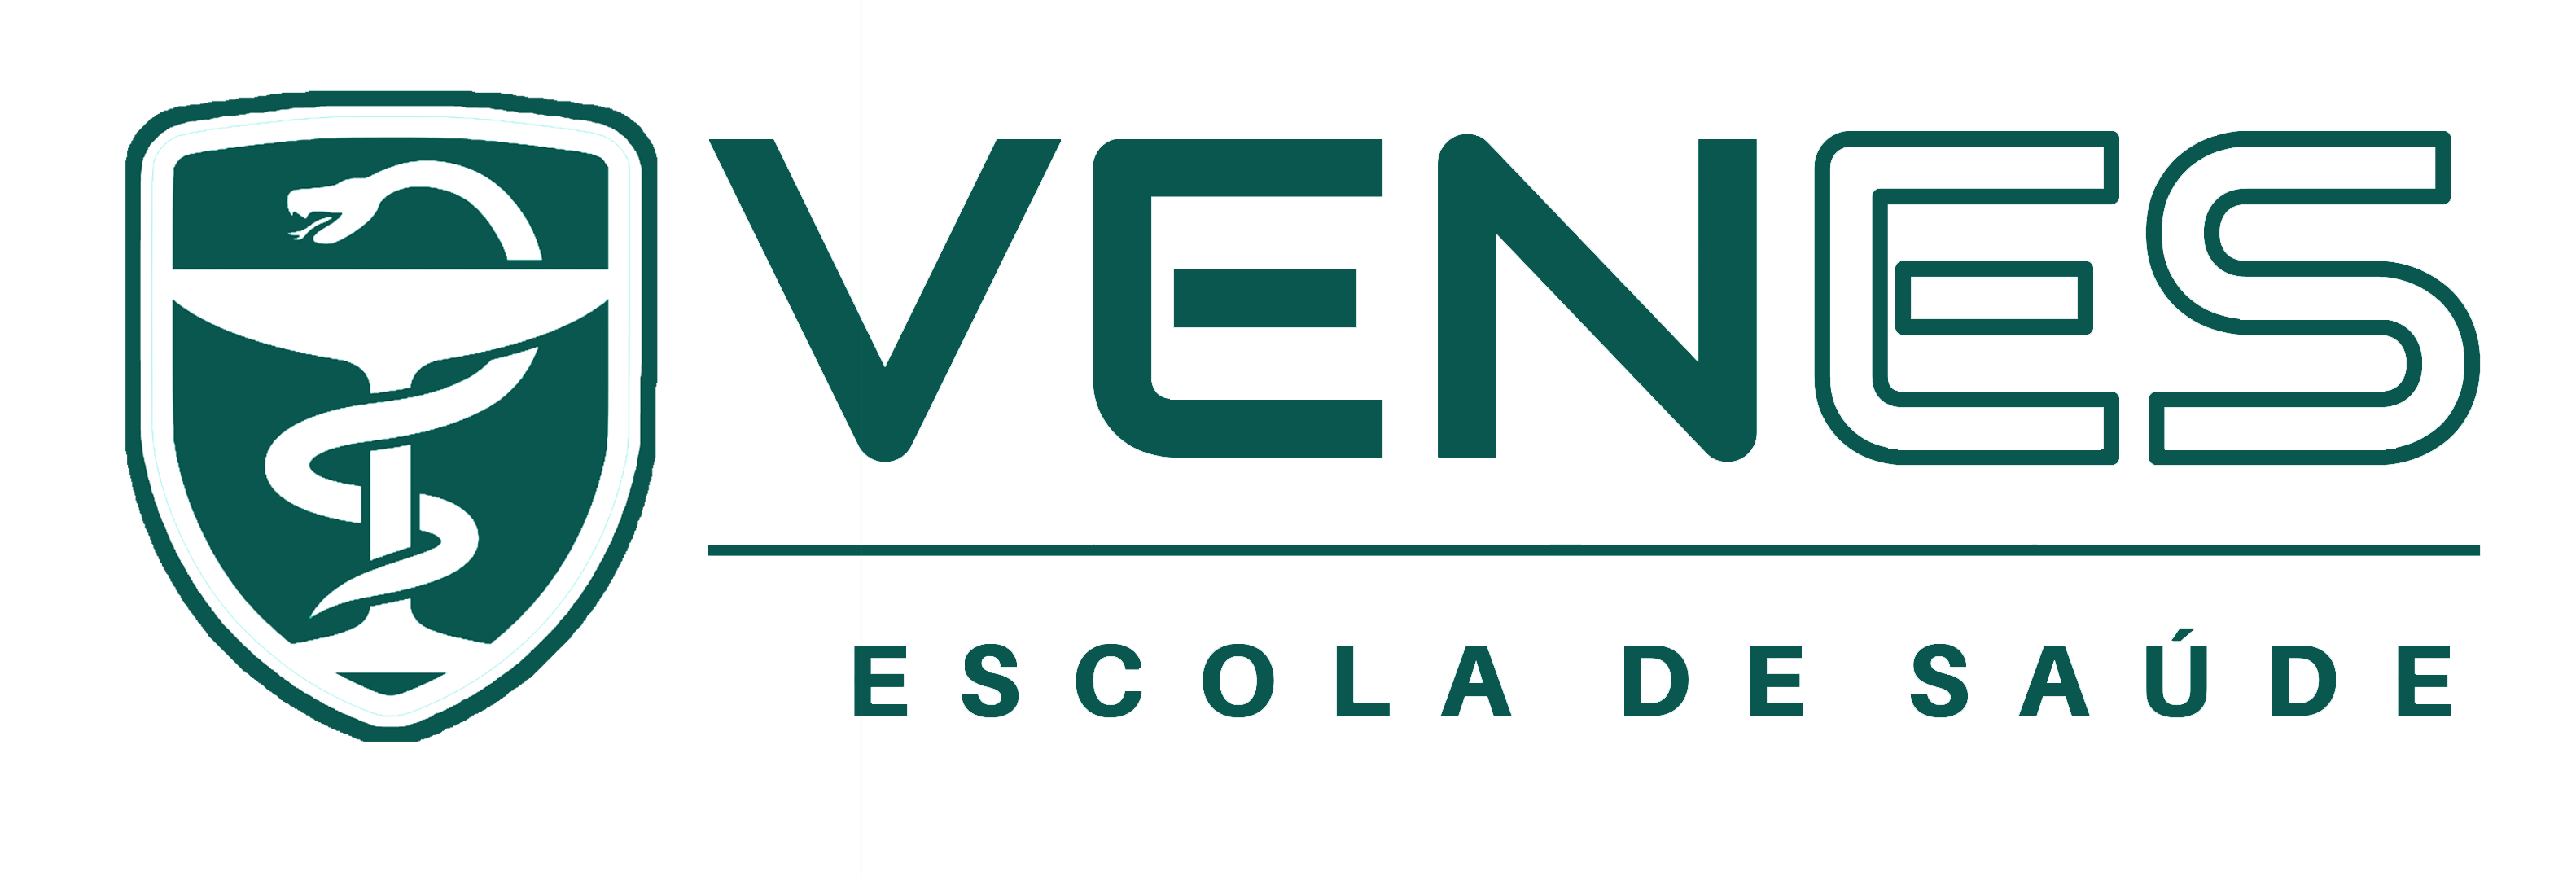 Logo Venes